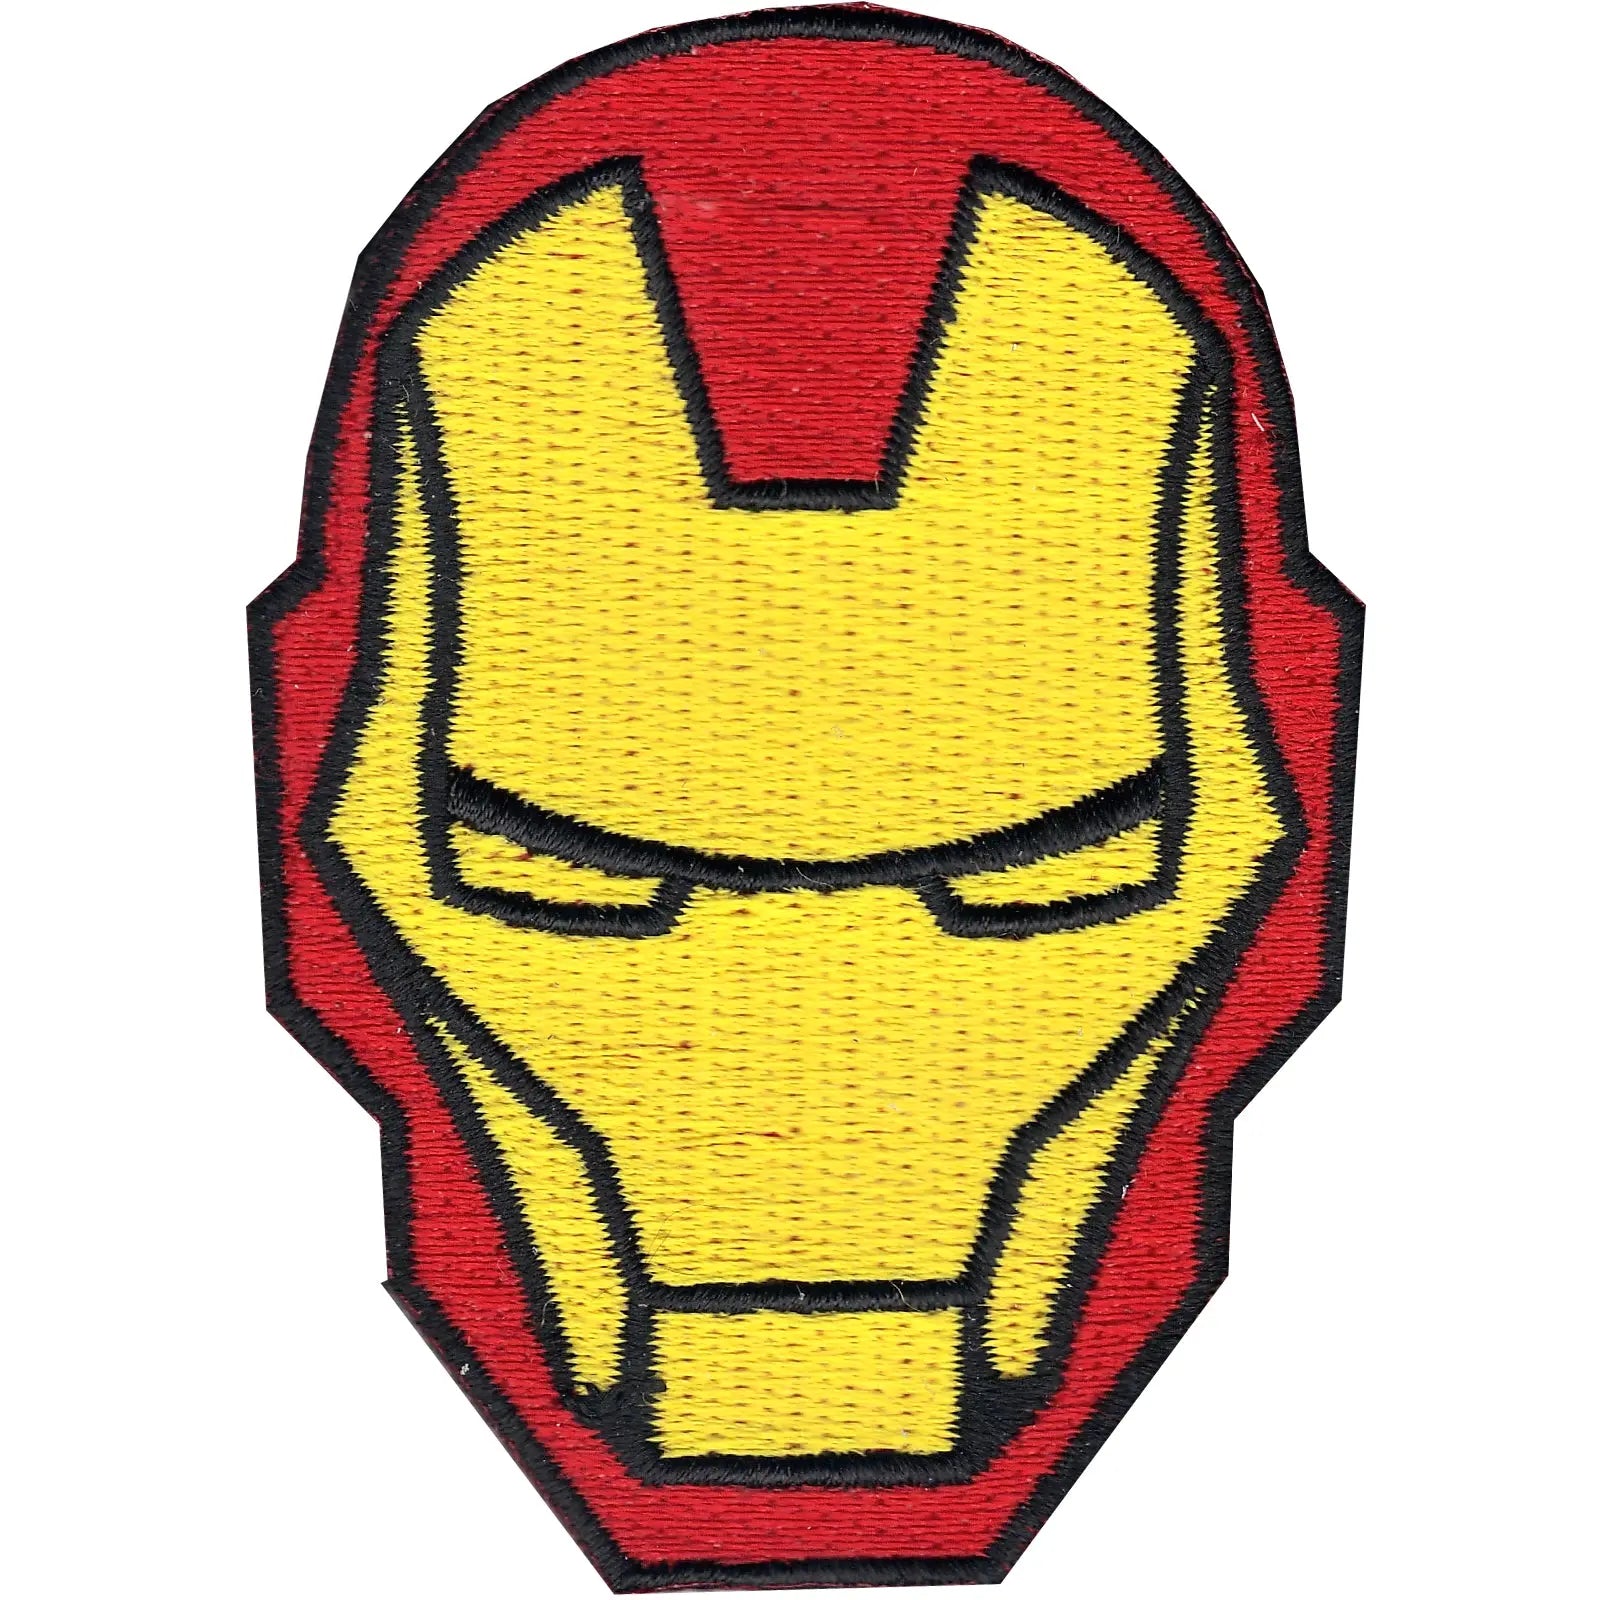 The Avengers Iron Man Helmet Iron on Patch 